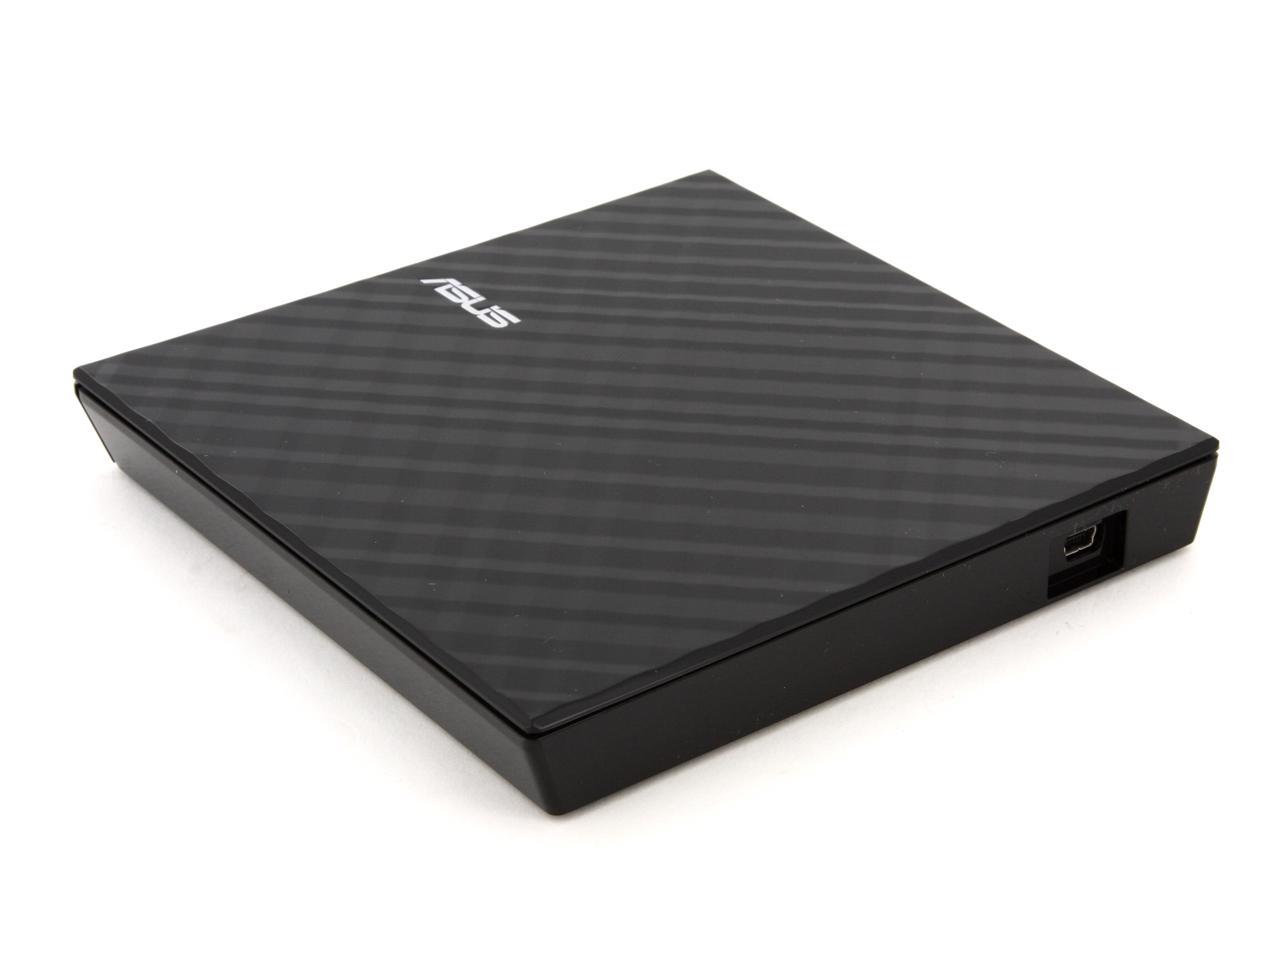 Asus Usb 2 0 Black External Slim Cd Dvd Re Writer Macos Compatible Model Sdrw 08d2s U Newegg Com